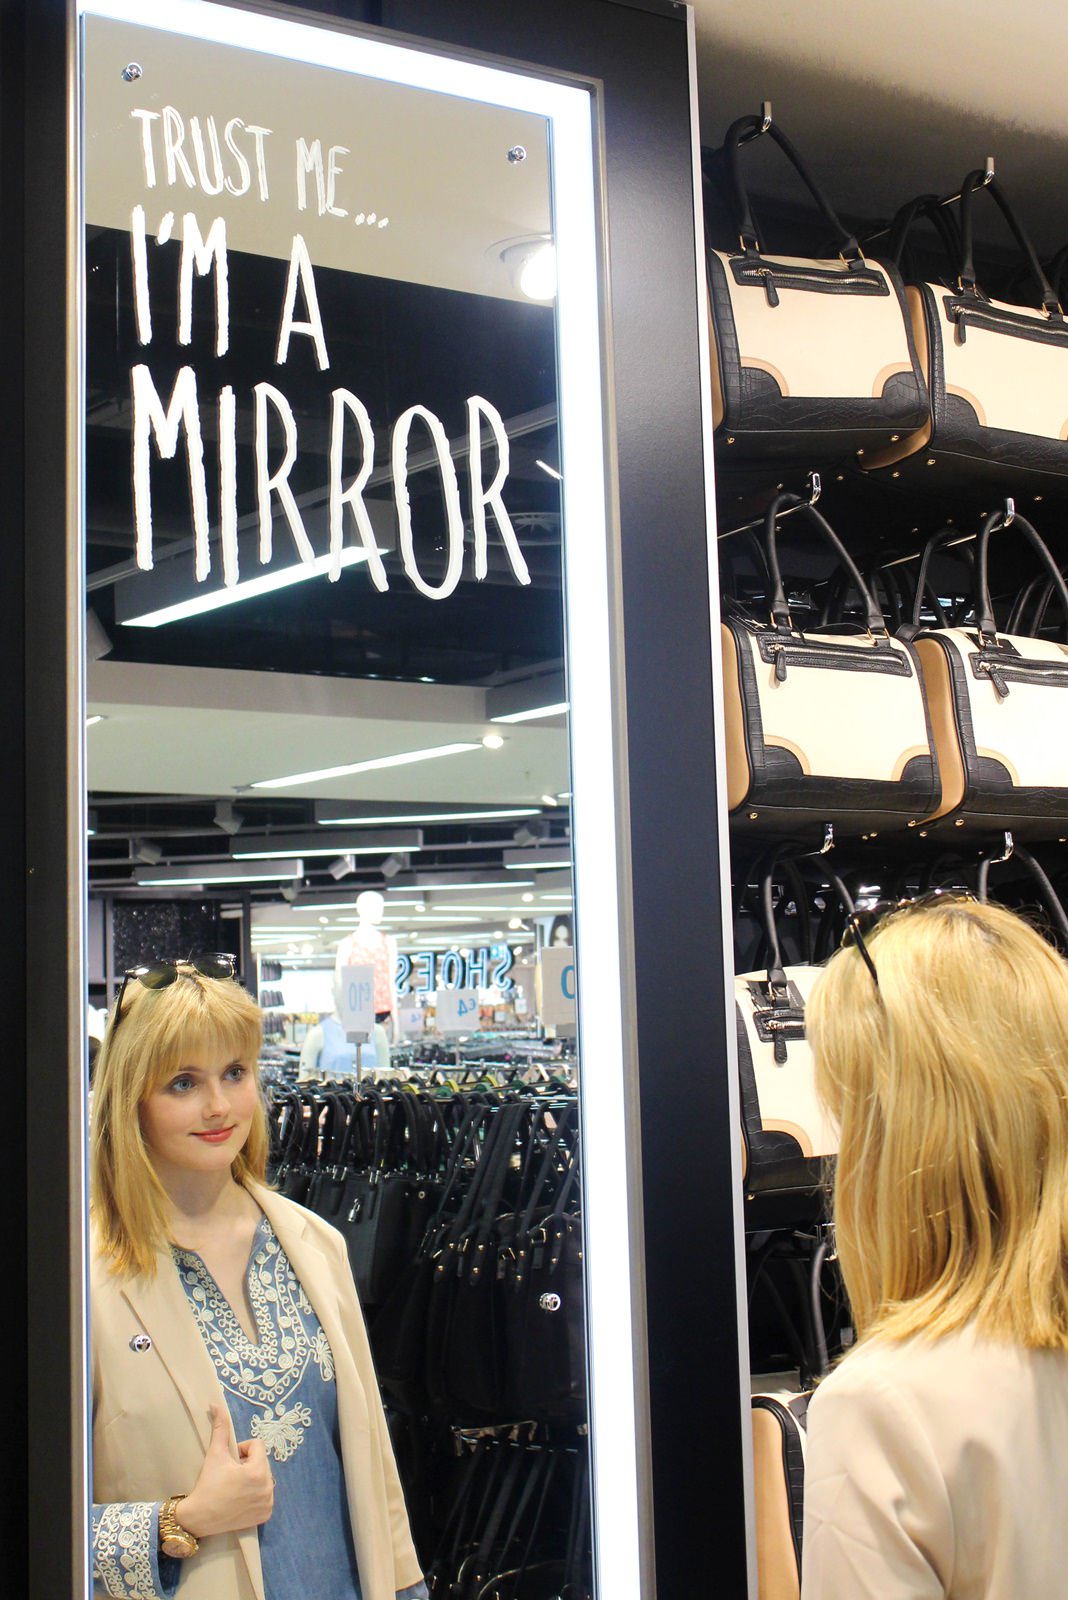 Trust me, I'm a mirror